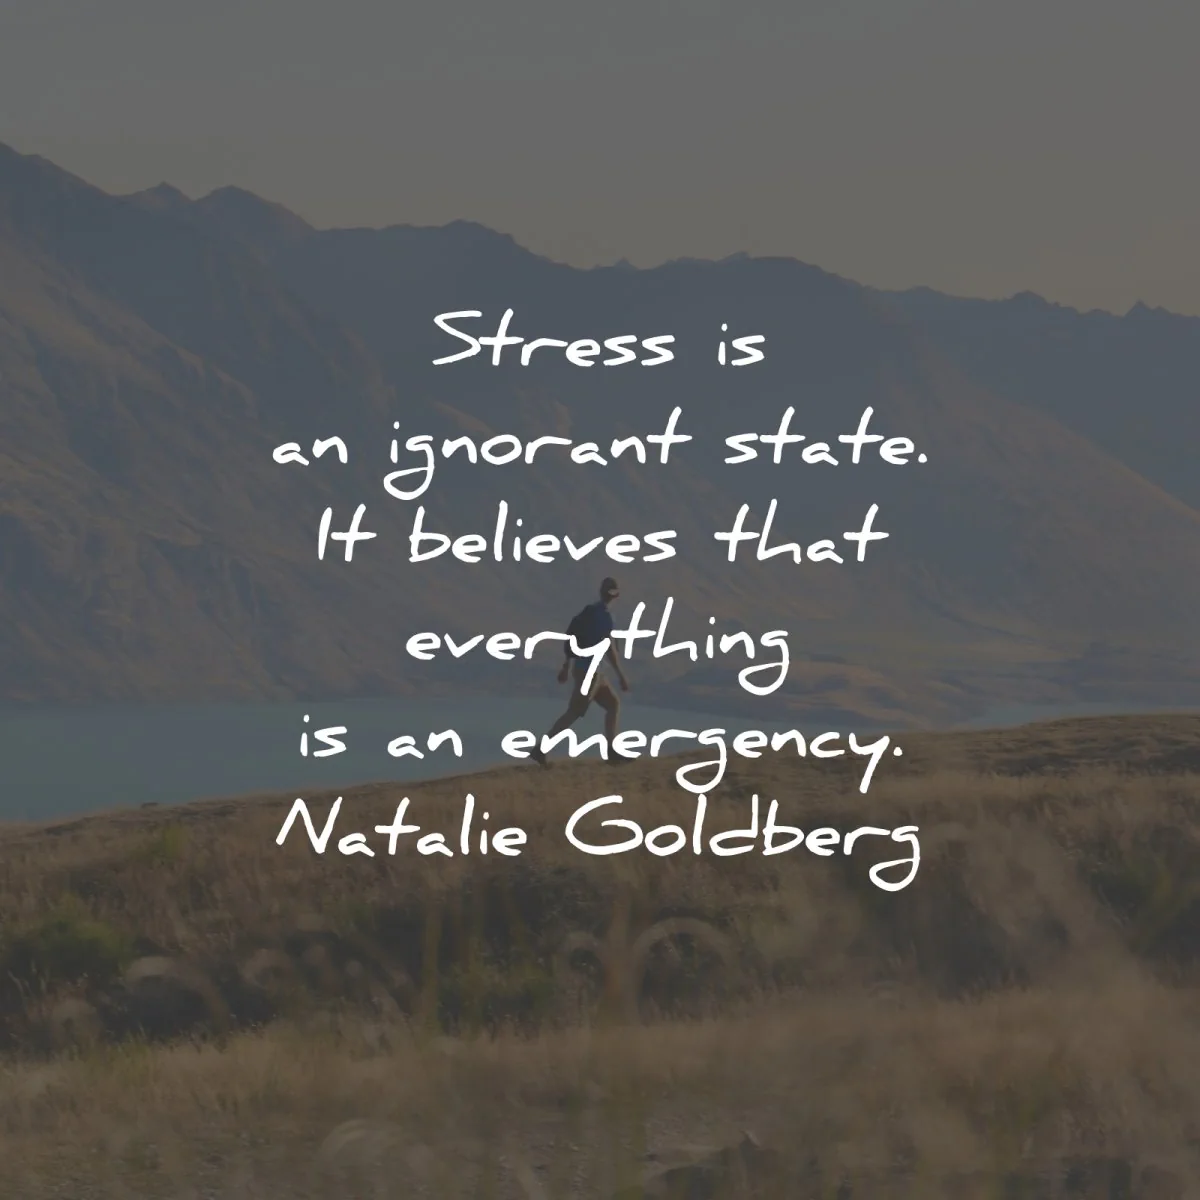 stress quotes ignorant state believes natalie goldberg wisdom